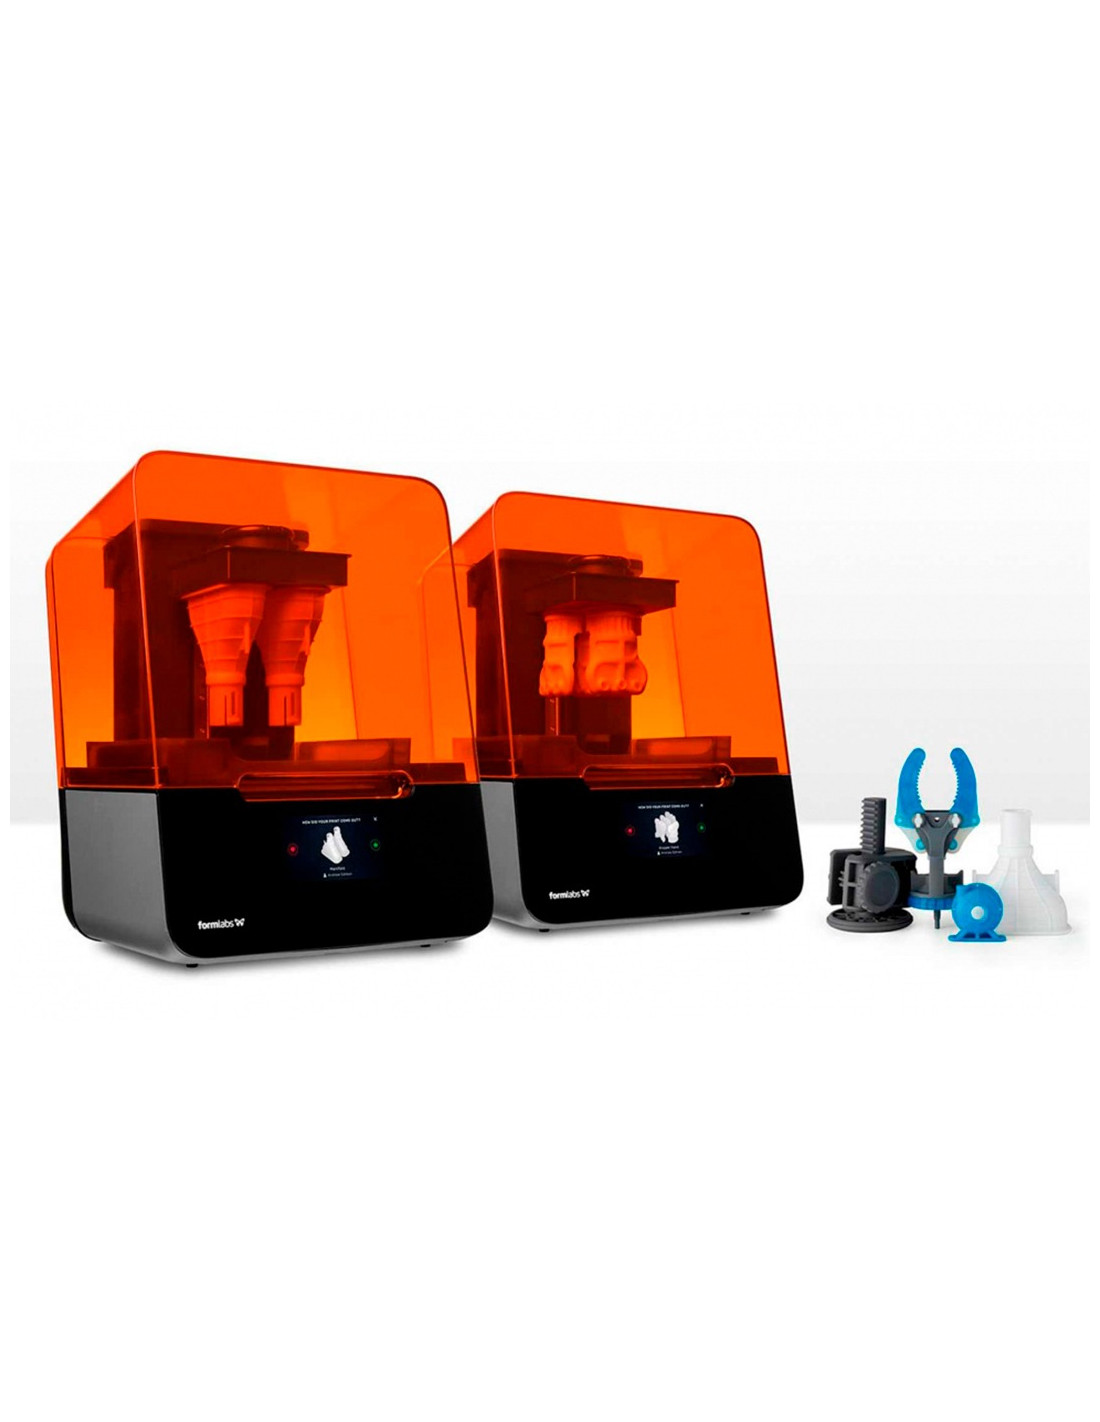 FormLabs Form 3 3D-Drucker - Basispaket